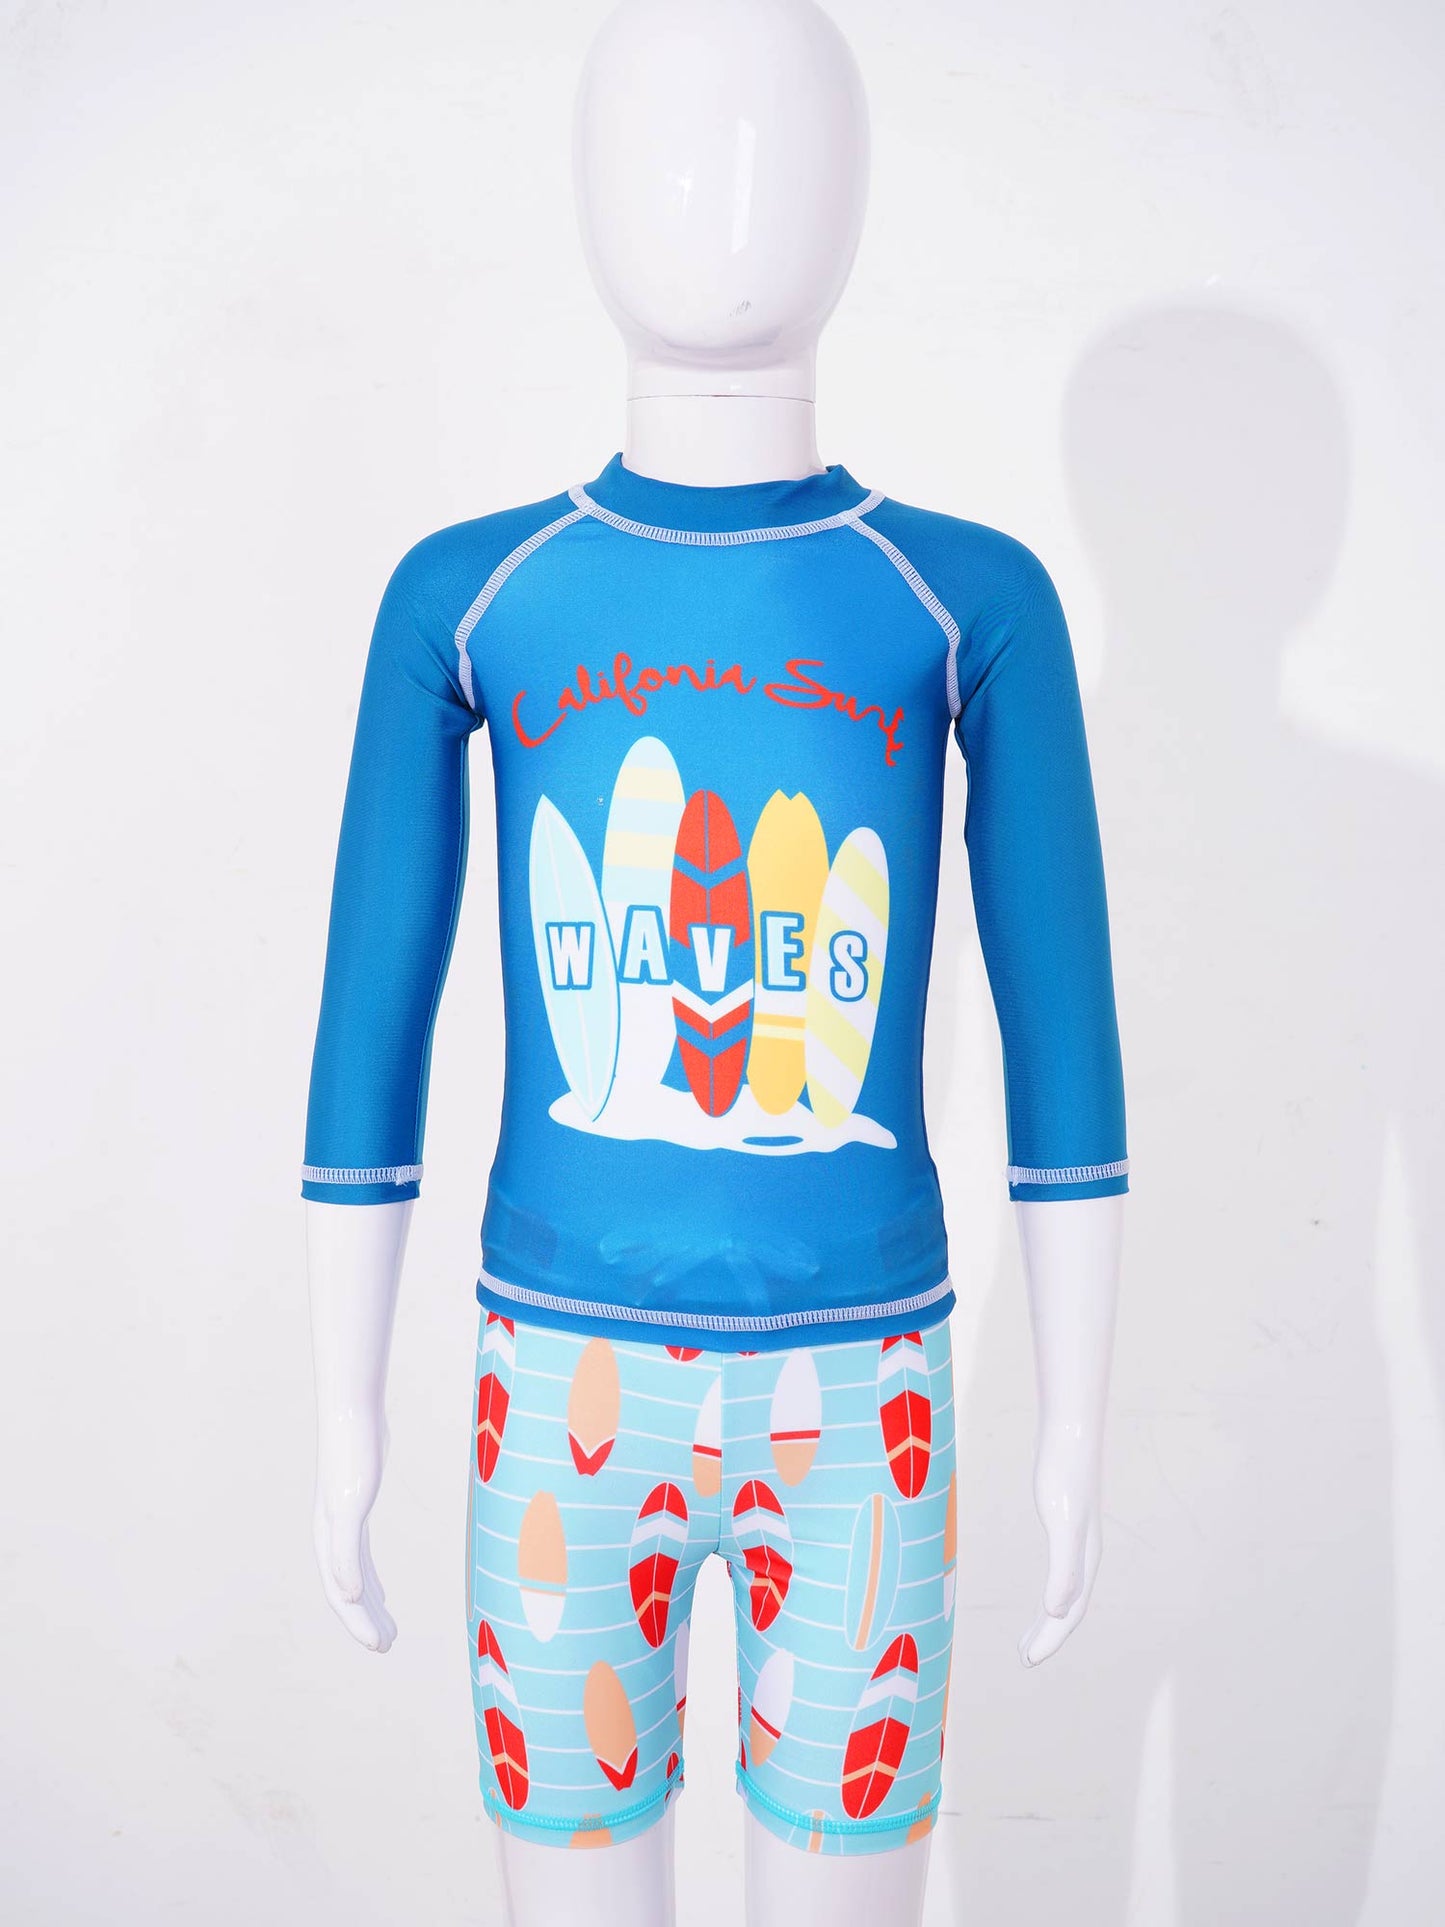 Kids Boys Summer Rashguard Swimwear Long Sleeve Tops Shorts Cartoon Print Swimming Suit